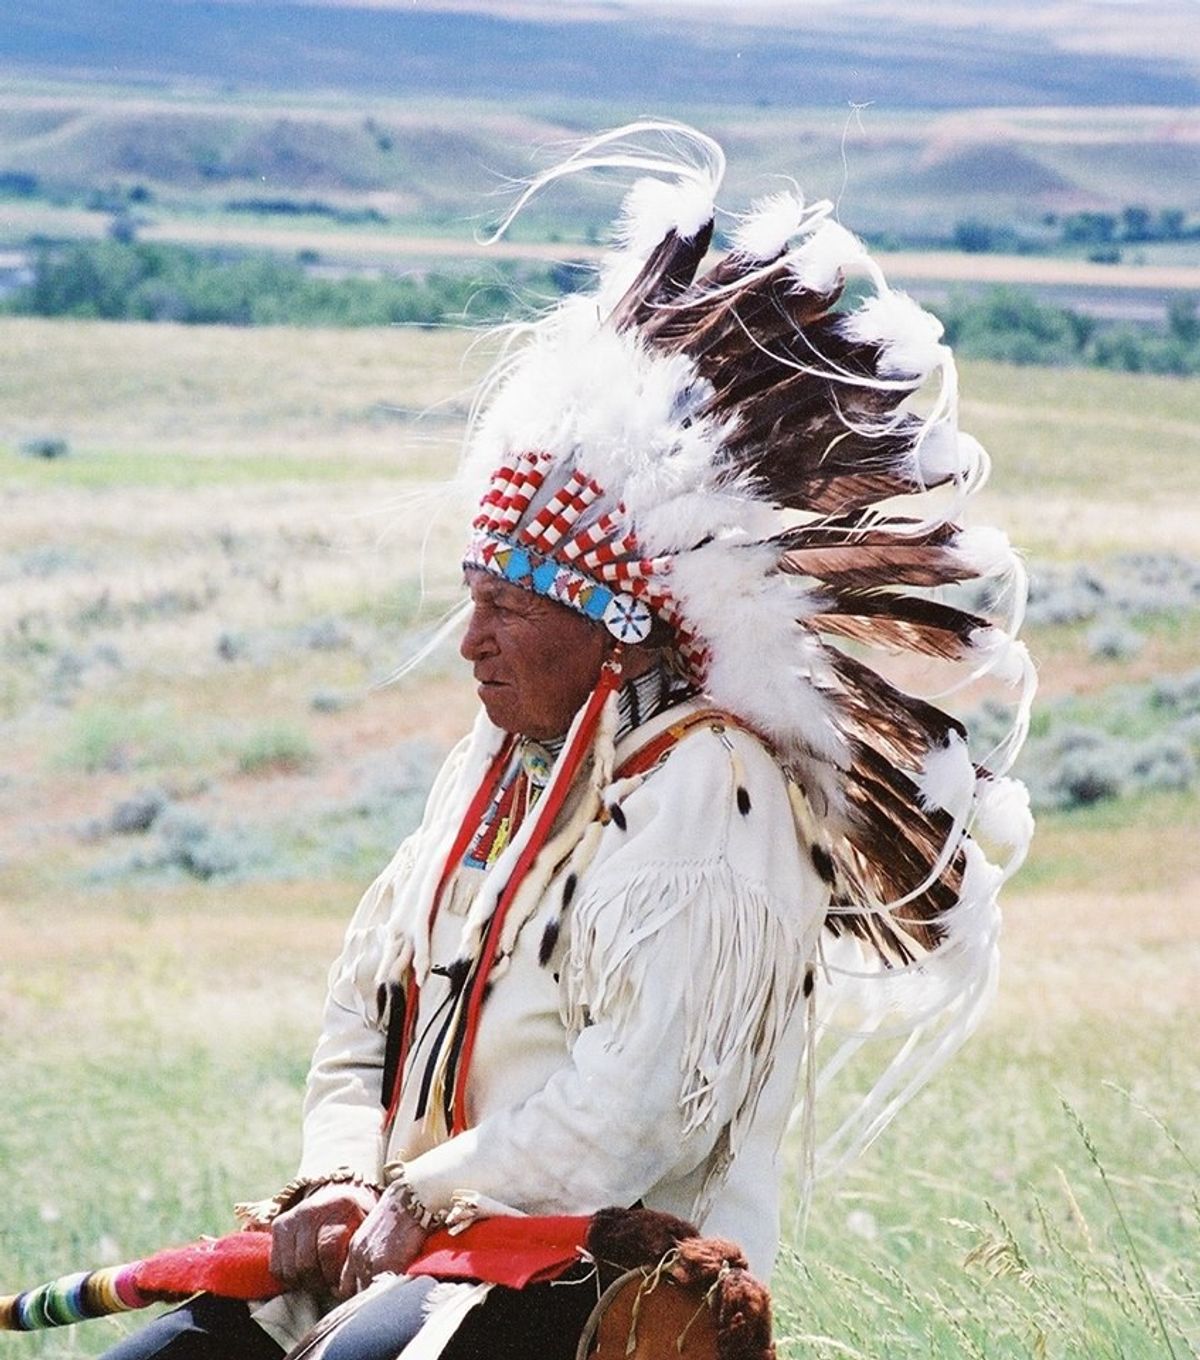 South Dakota Style: Cultural Appropriation vs Cultural Appreciation